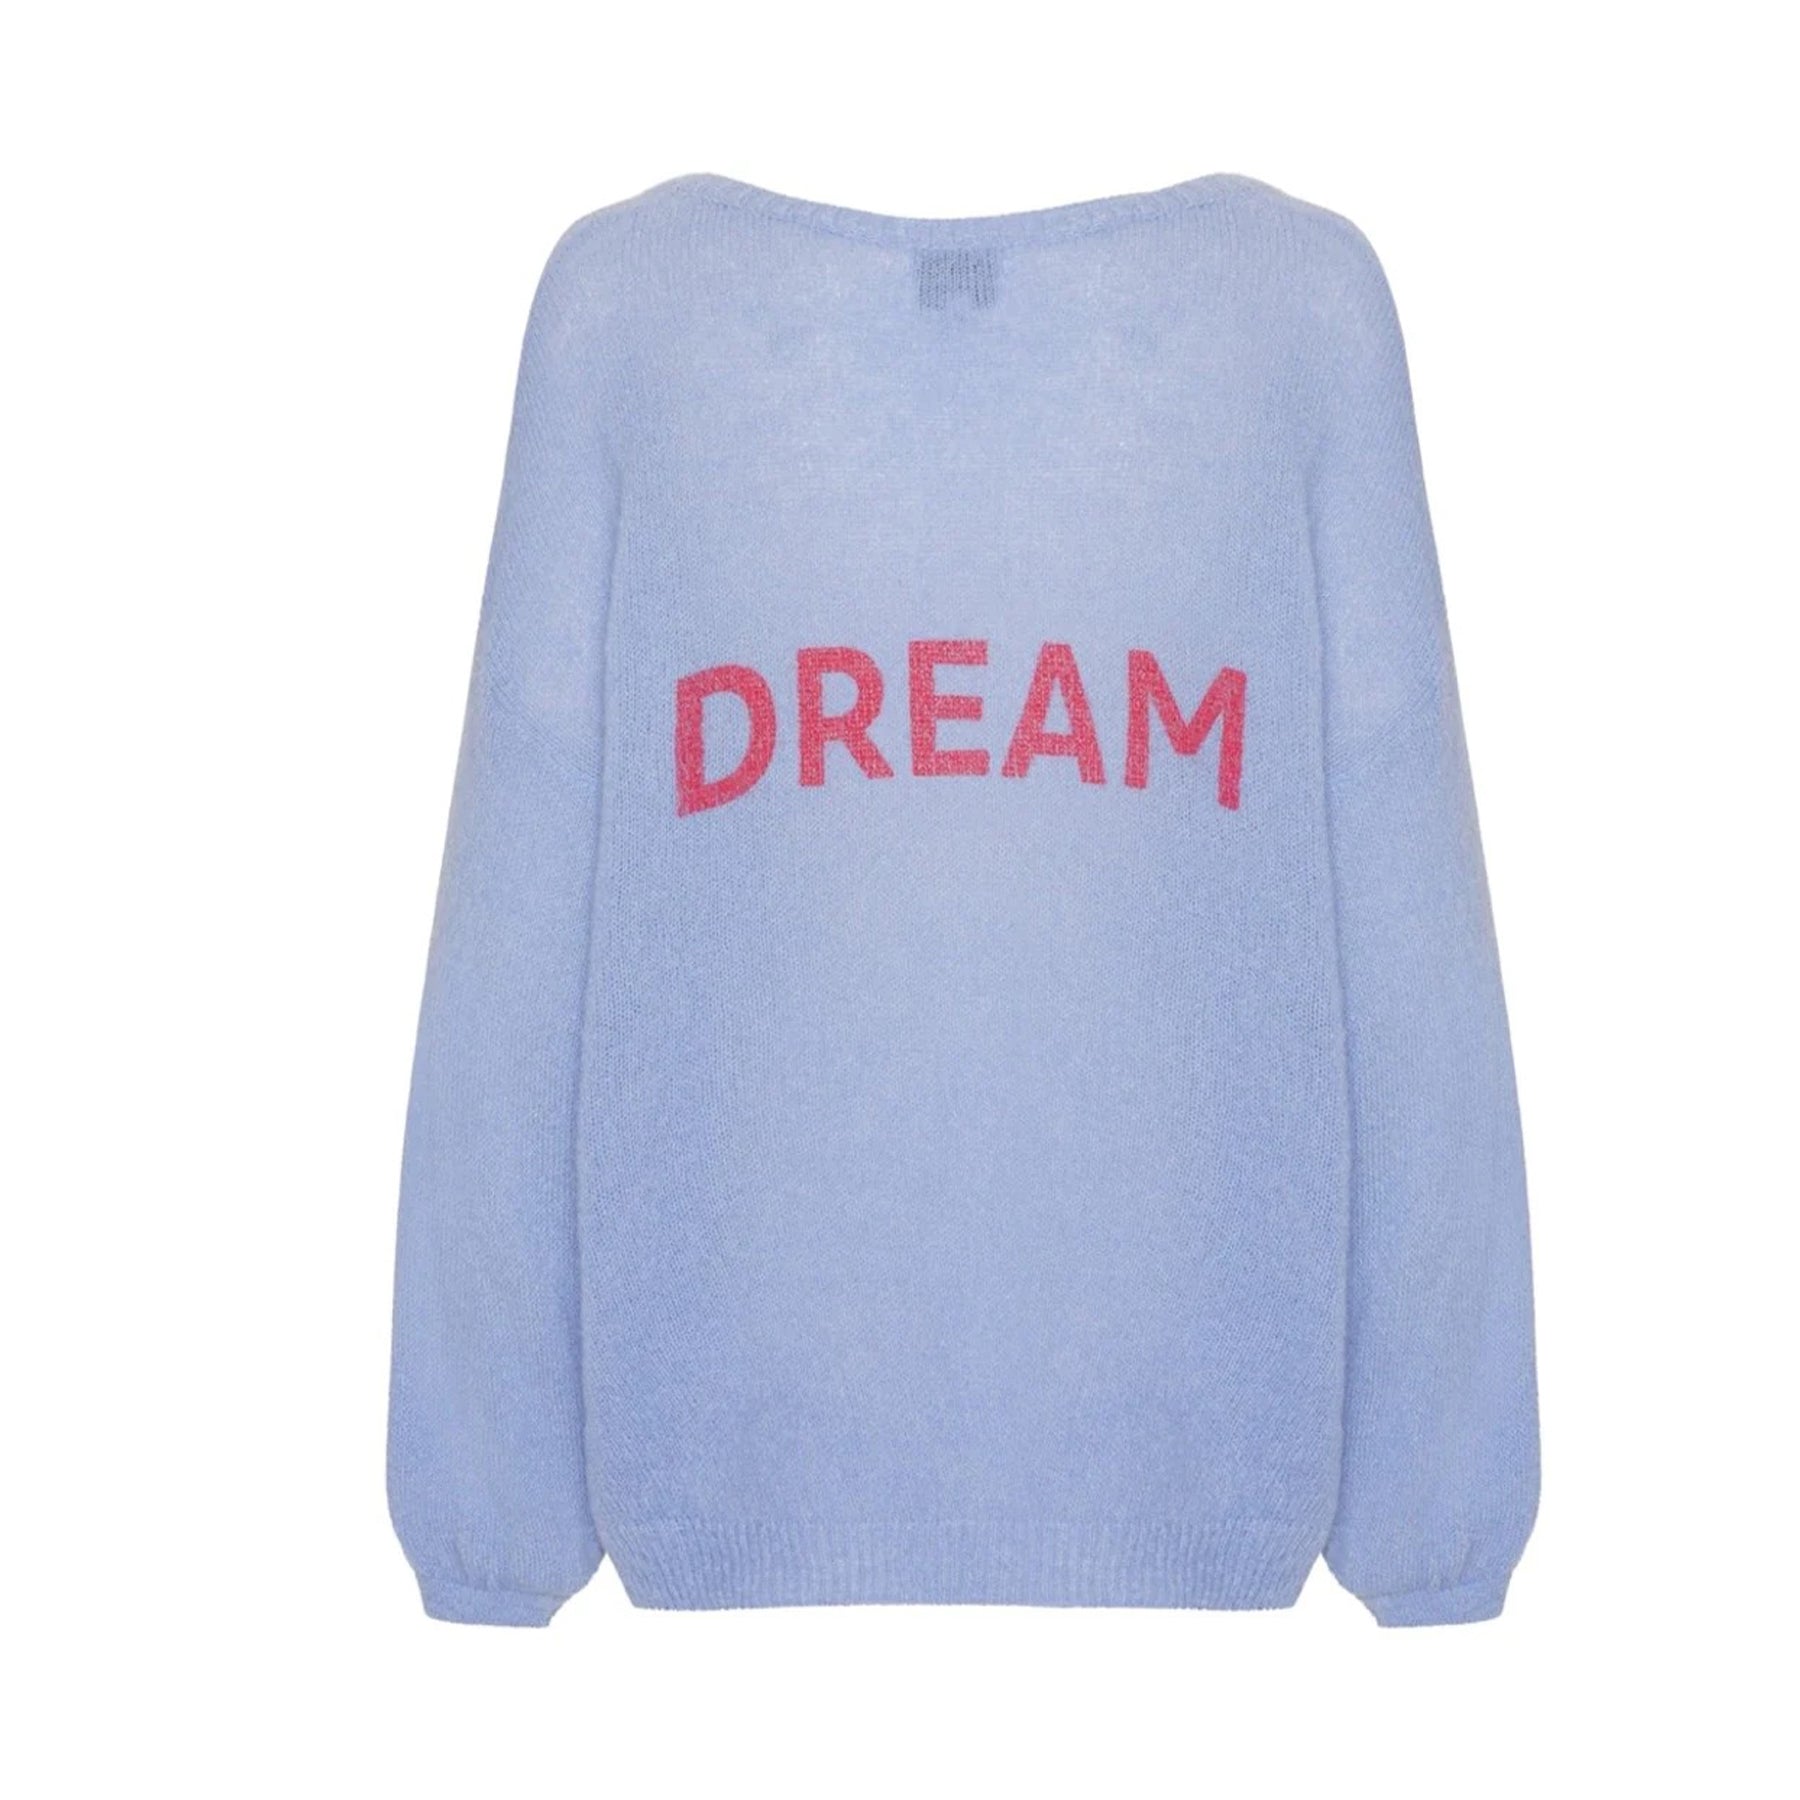 Americandreams Pullover Dream Hellblau - KNOCKNOK Fashion